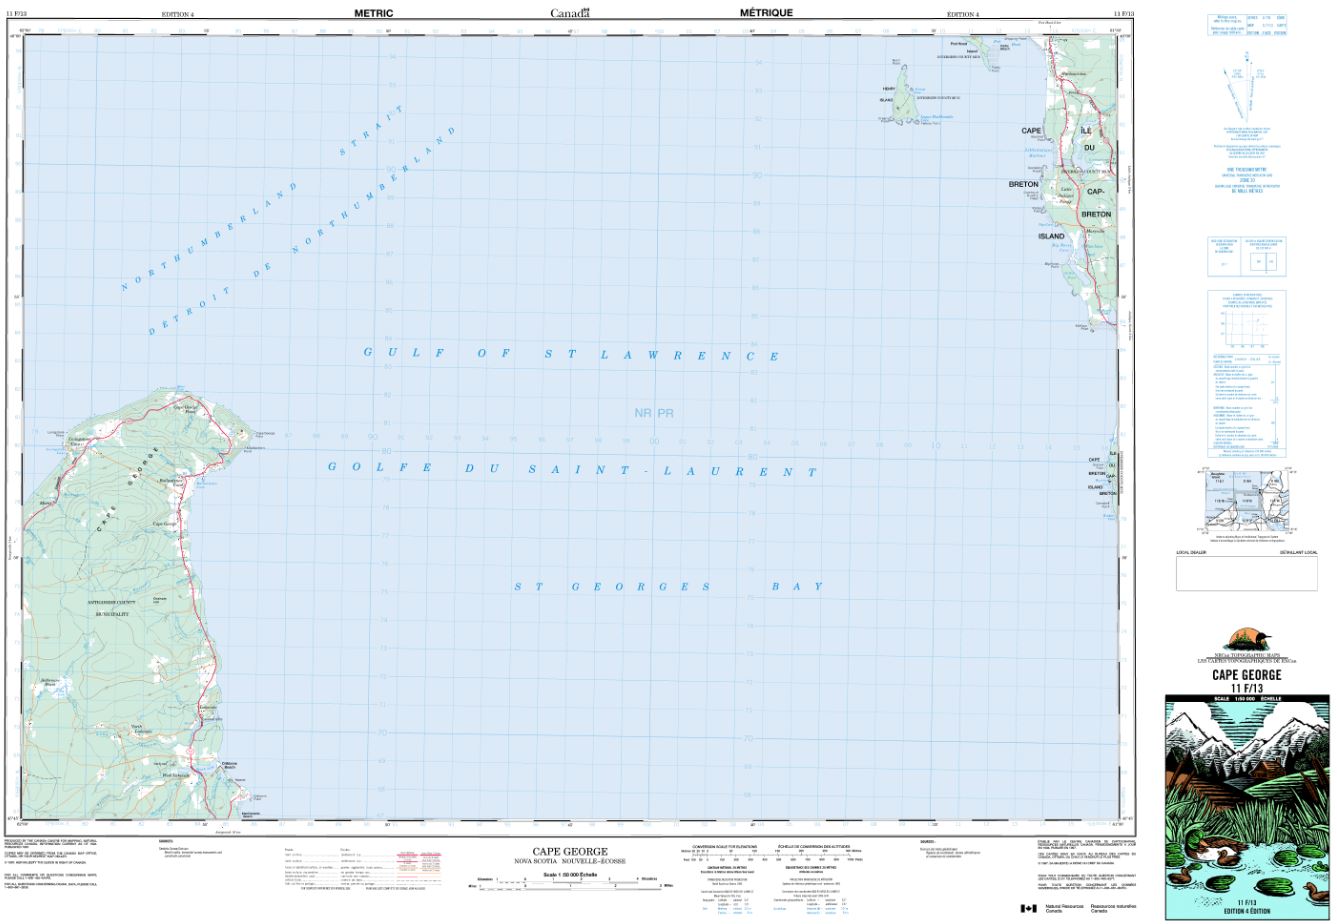 11f13 Cape George Topographic Map Nova Scotia Tyvek Maps And More 7388